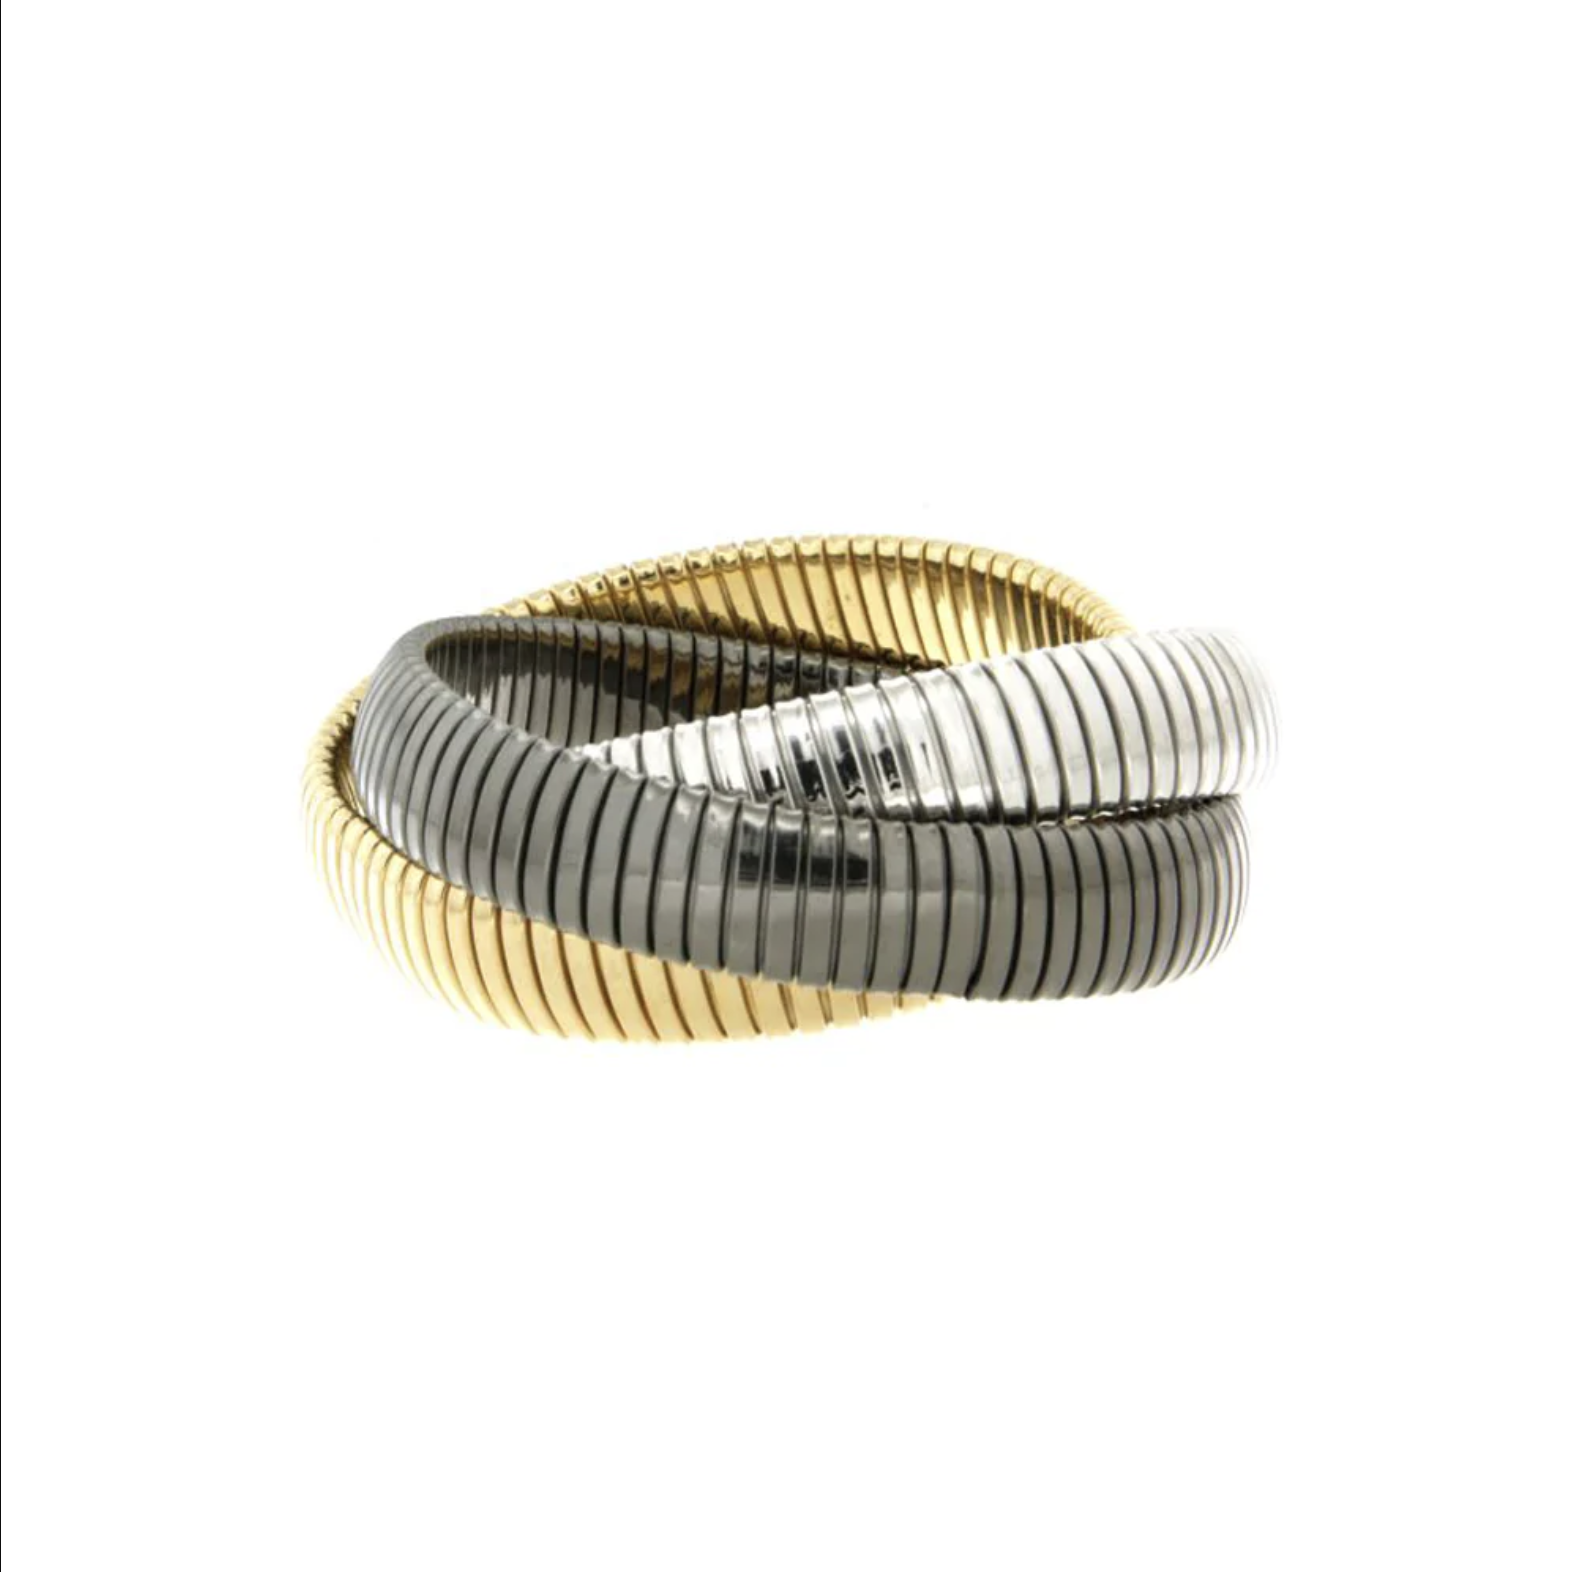 Jennifer Miller Jewelry - The perfect pairing #jewelry #bracelets #triples  #hopehoops2022 #mixedmetalsjewelry #jewelryaddict #braceletoftheday #hoops  #accessories #jennifermillerjewelry #jennygirl #braceletstack #nyc  #hamptons #southbeach #palmbeach ...